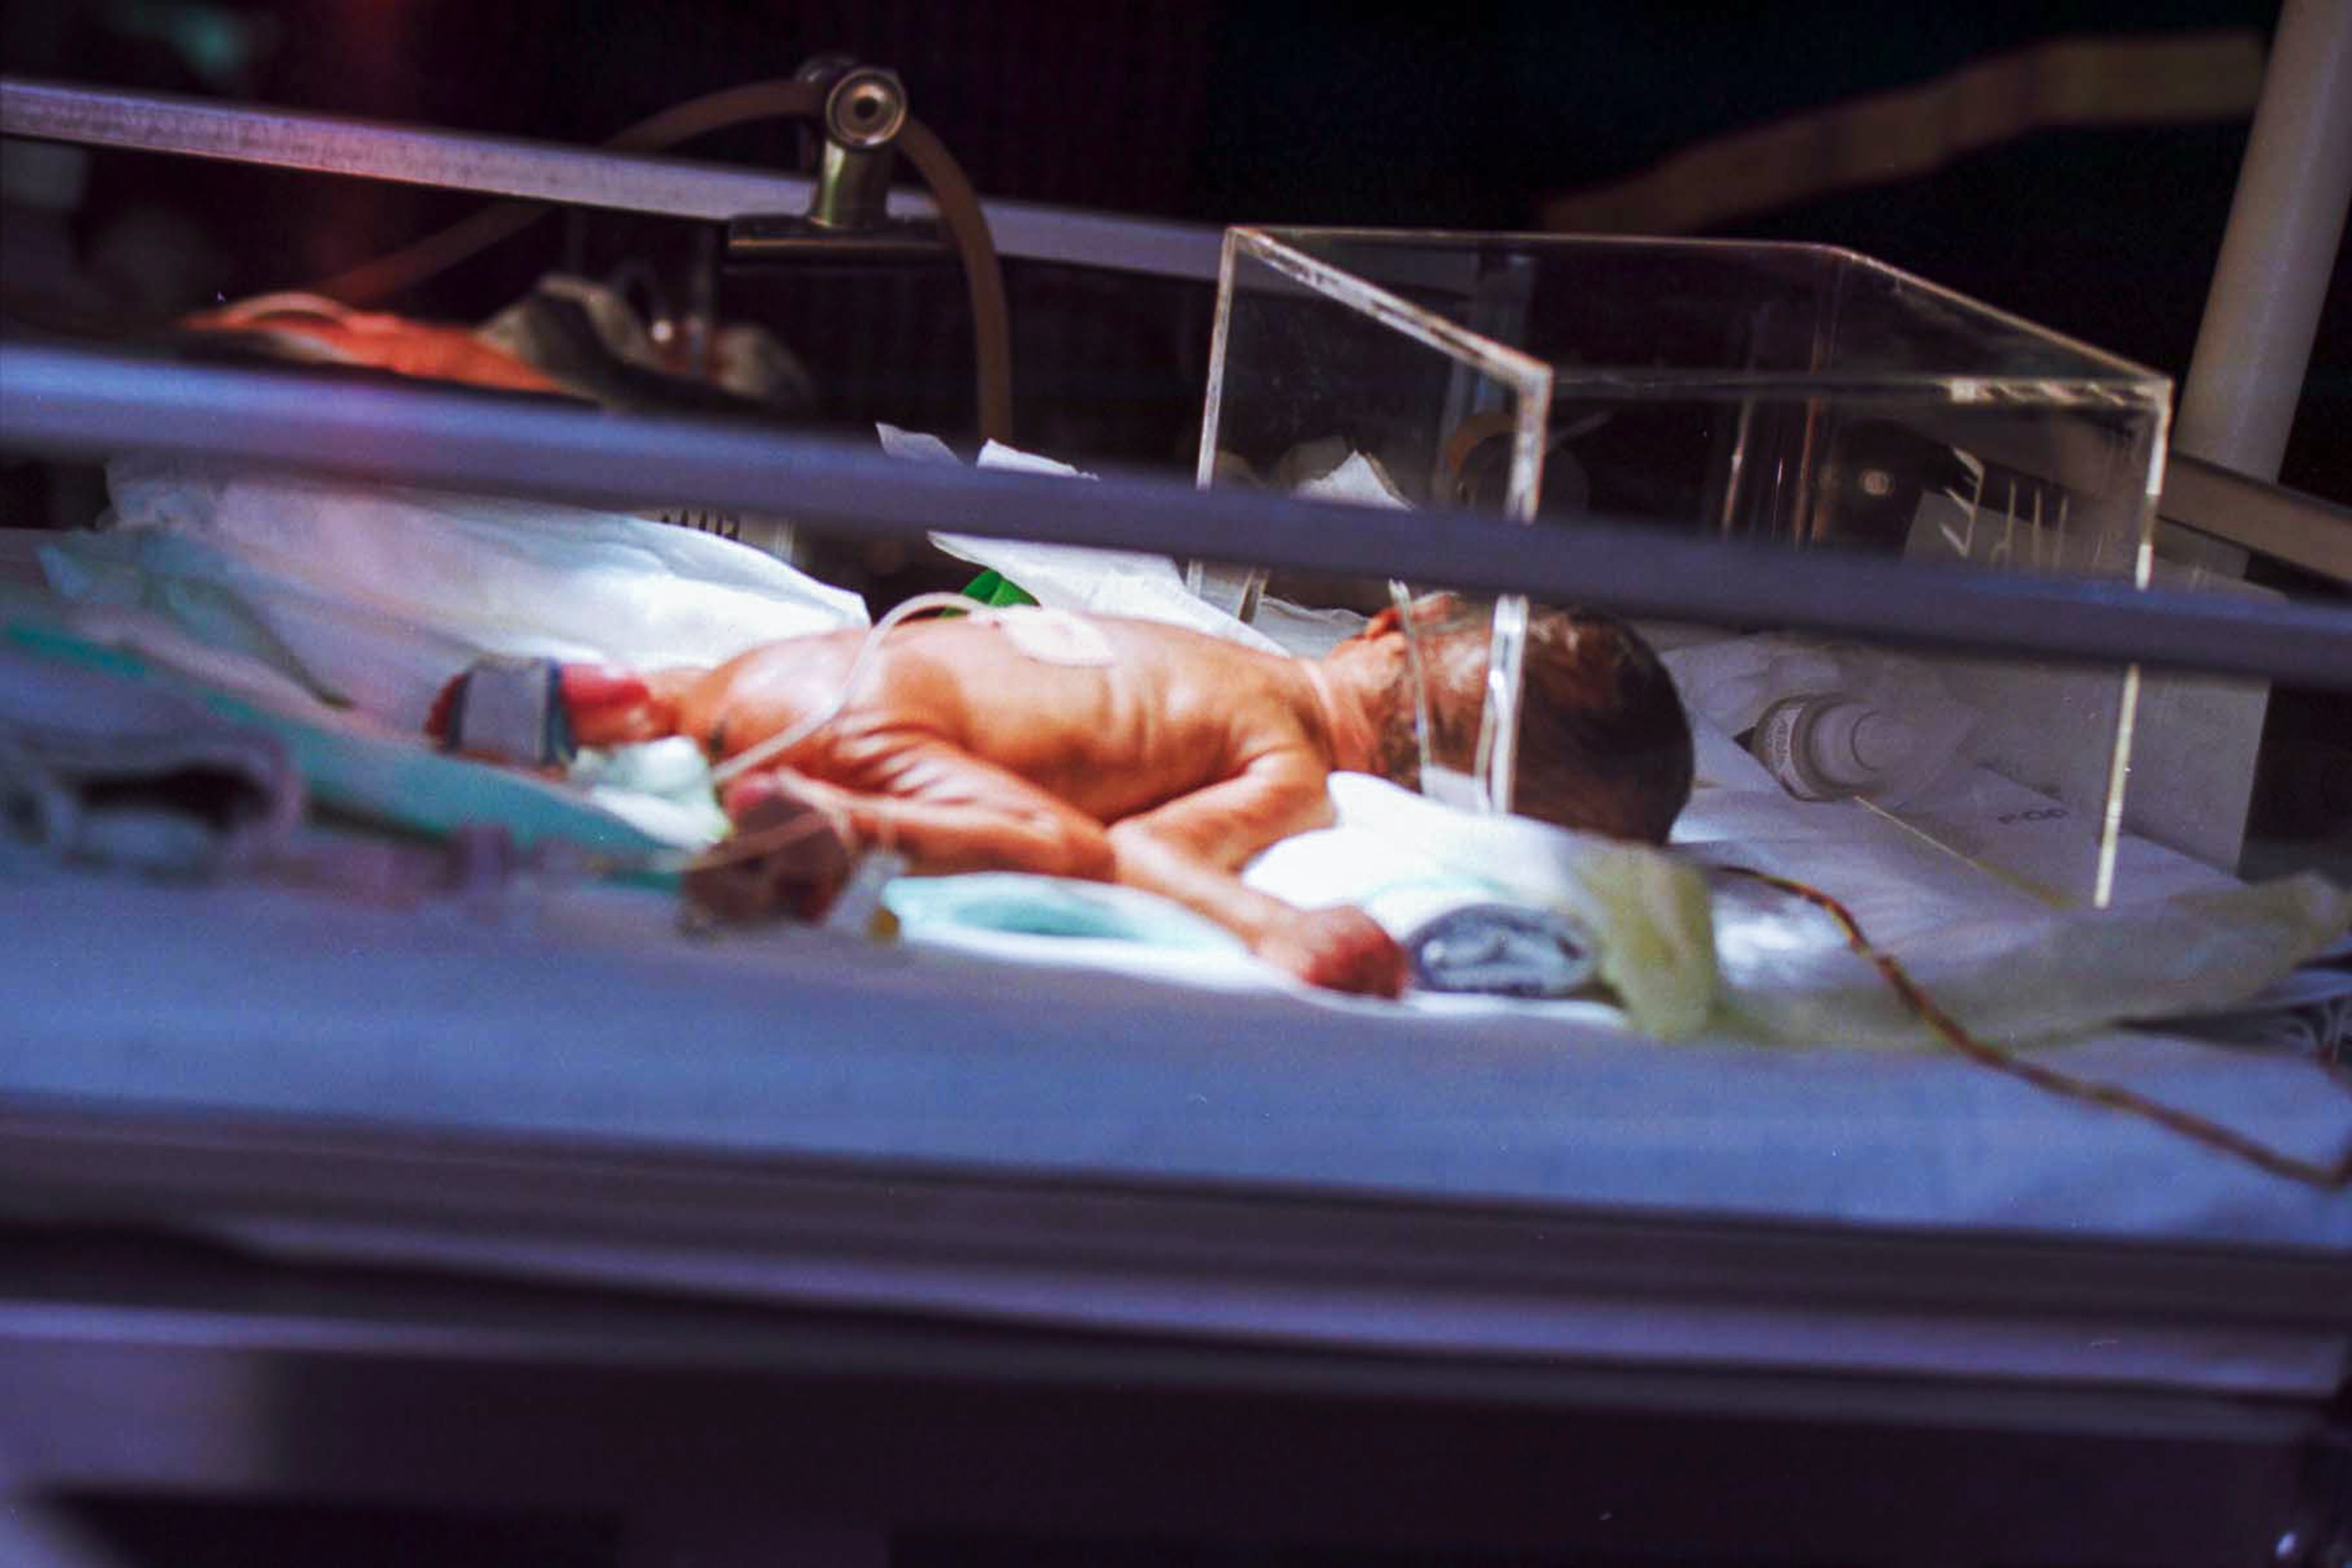 Infant in incubator; image by Hush Naido Jade Photography, via Unsplash.com.